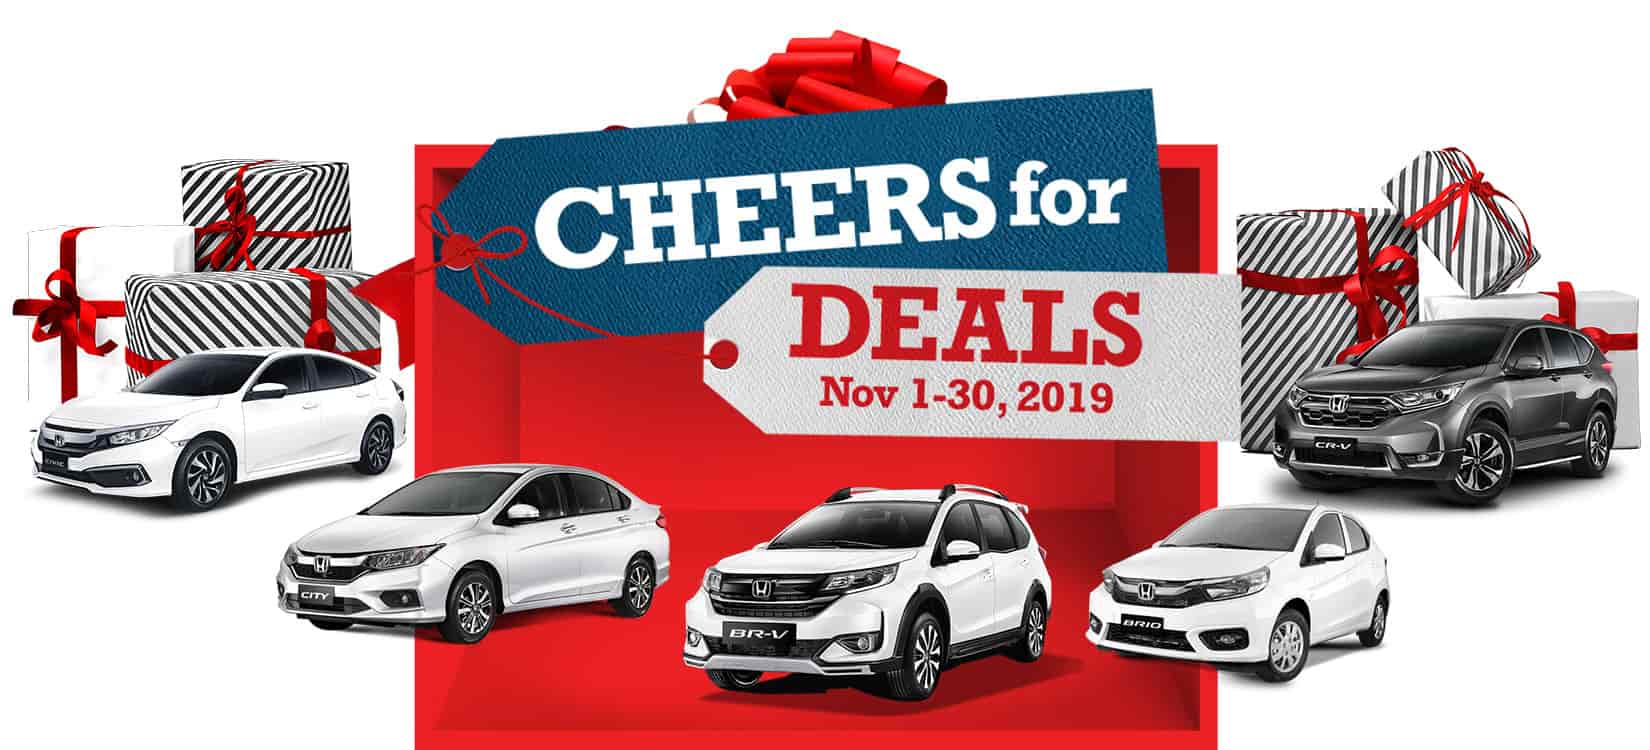 Honda Cars Philippines Honda Offers Holiday Promos This November